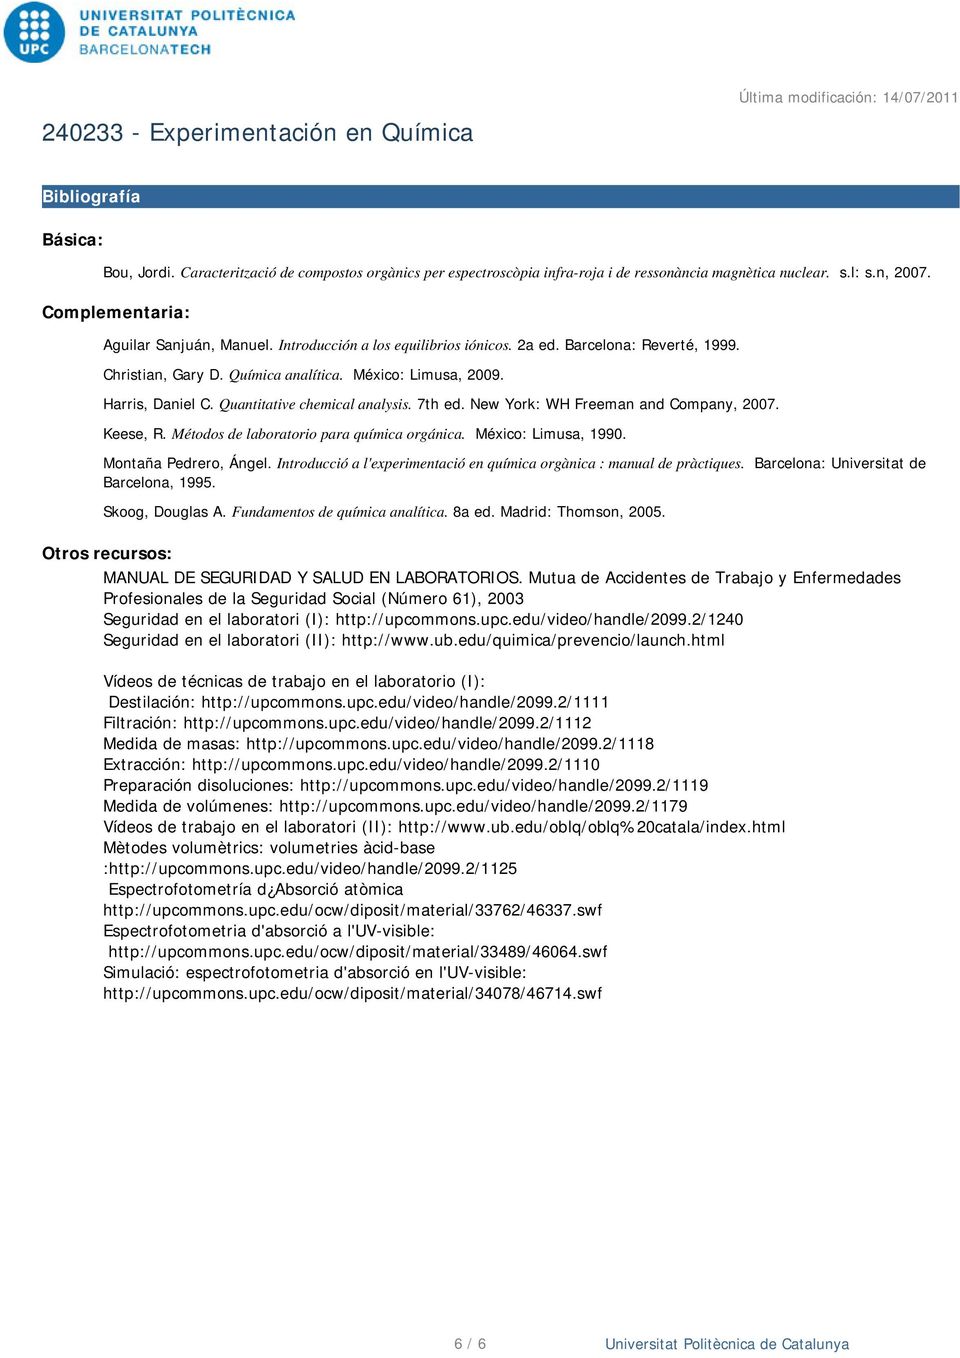 Quantitative chemical analysis. 7th ed. New York: WH Freeman and Company, 2007. Keese, R. Métodos de laboratorio para química orgánica. México: Limusa, 1990. Montaña Pedrero, Ángel.